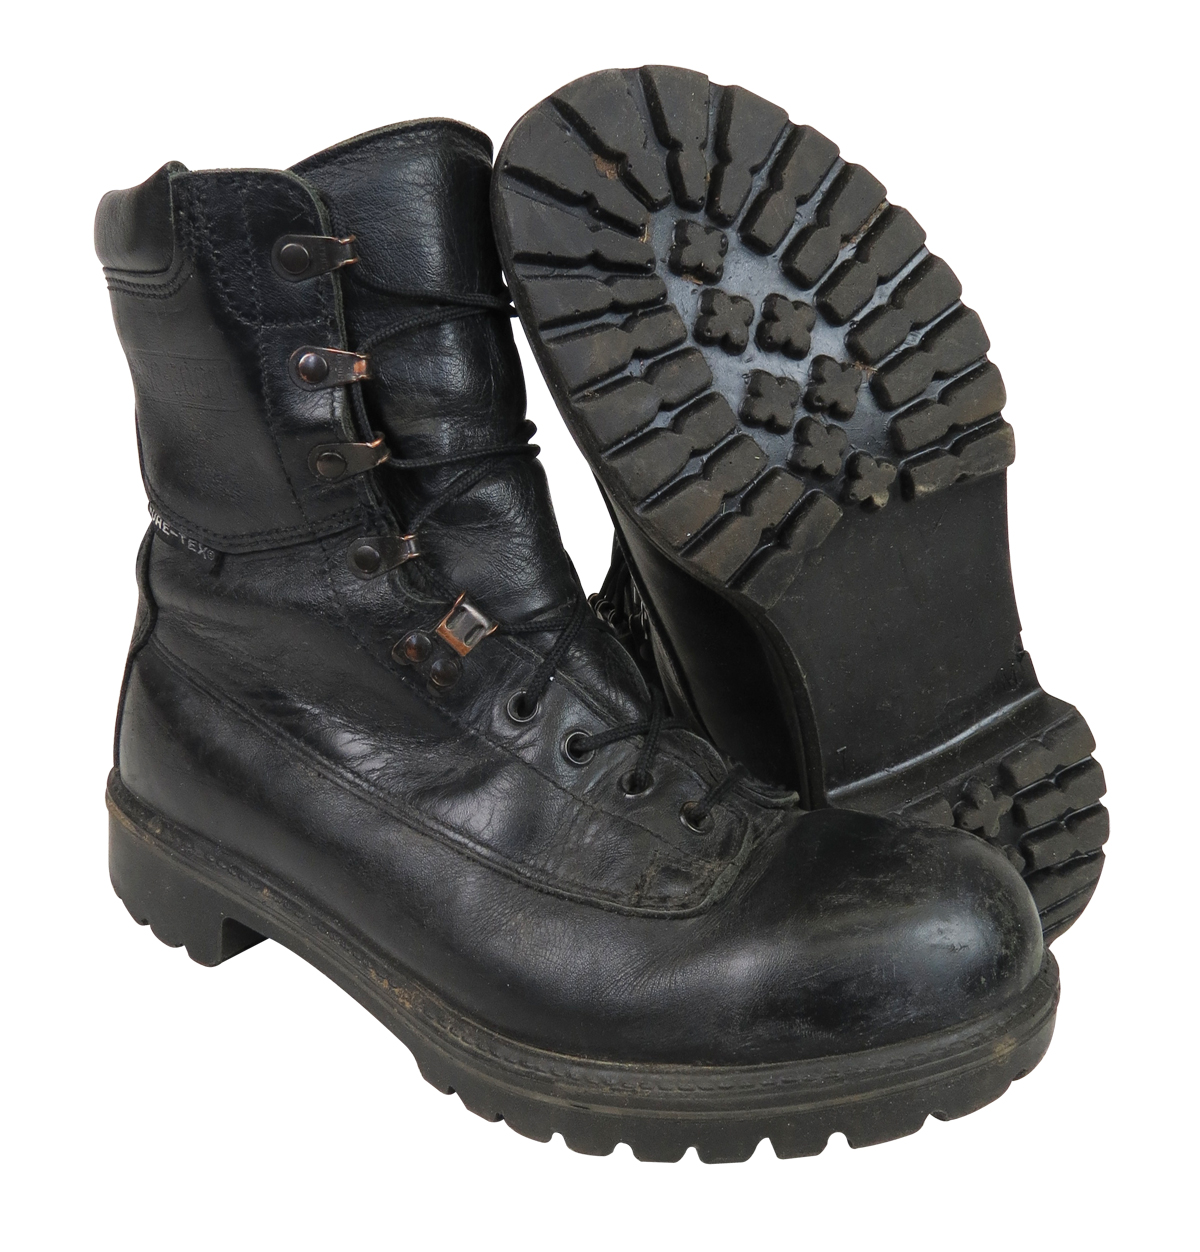 Used British Army Goretex Pro Boots